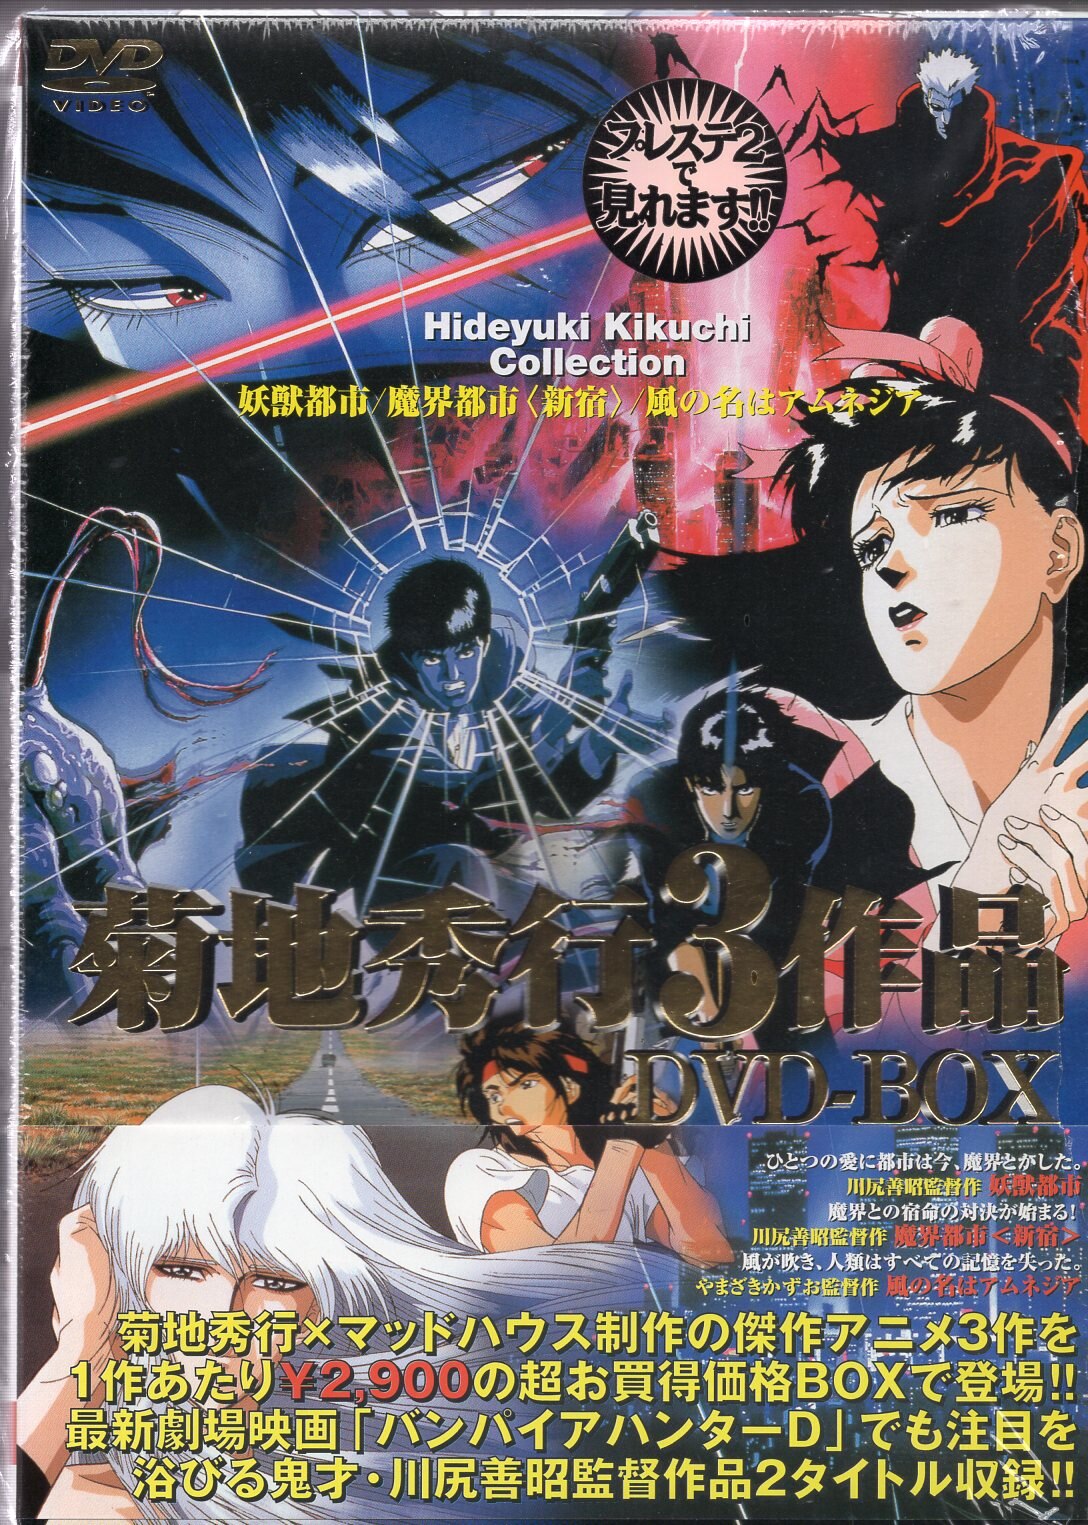 Japan Home Video Anime DVD Hideyuki Kikuchi 3 Movies DVD-BOX